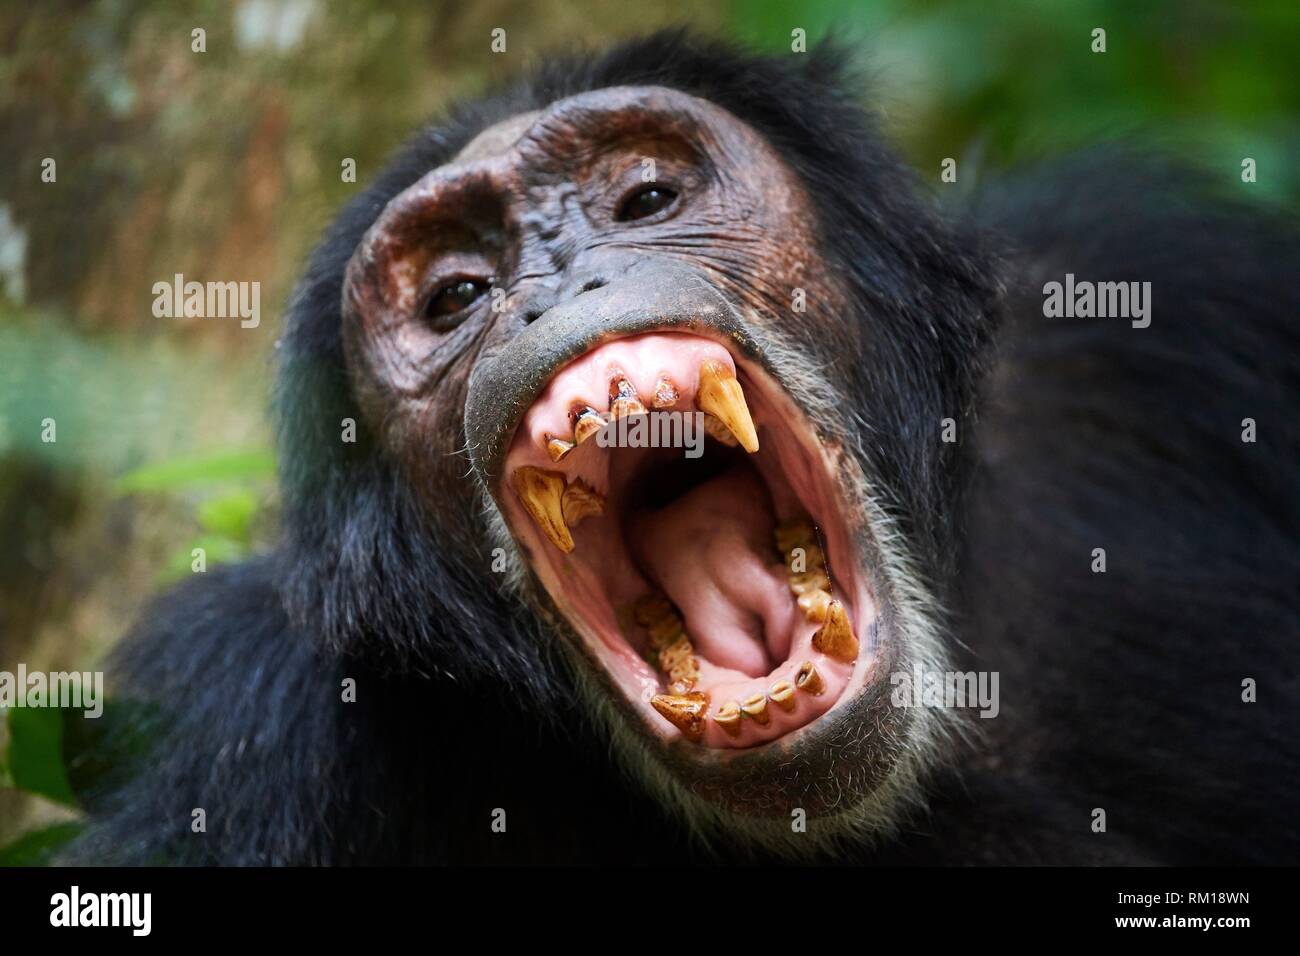 Schimpanse (Pan troglodytes schweinfurthii) männlich, Gähnen, Kibale Nationalpark, Uganda, Afrika. Stockfoto